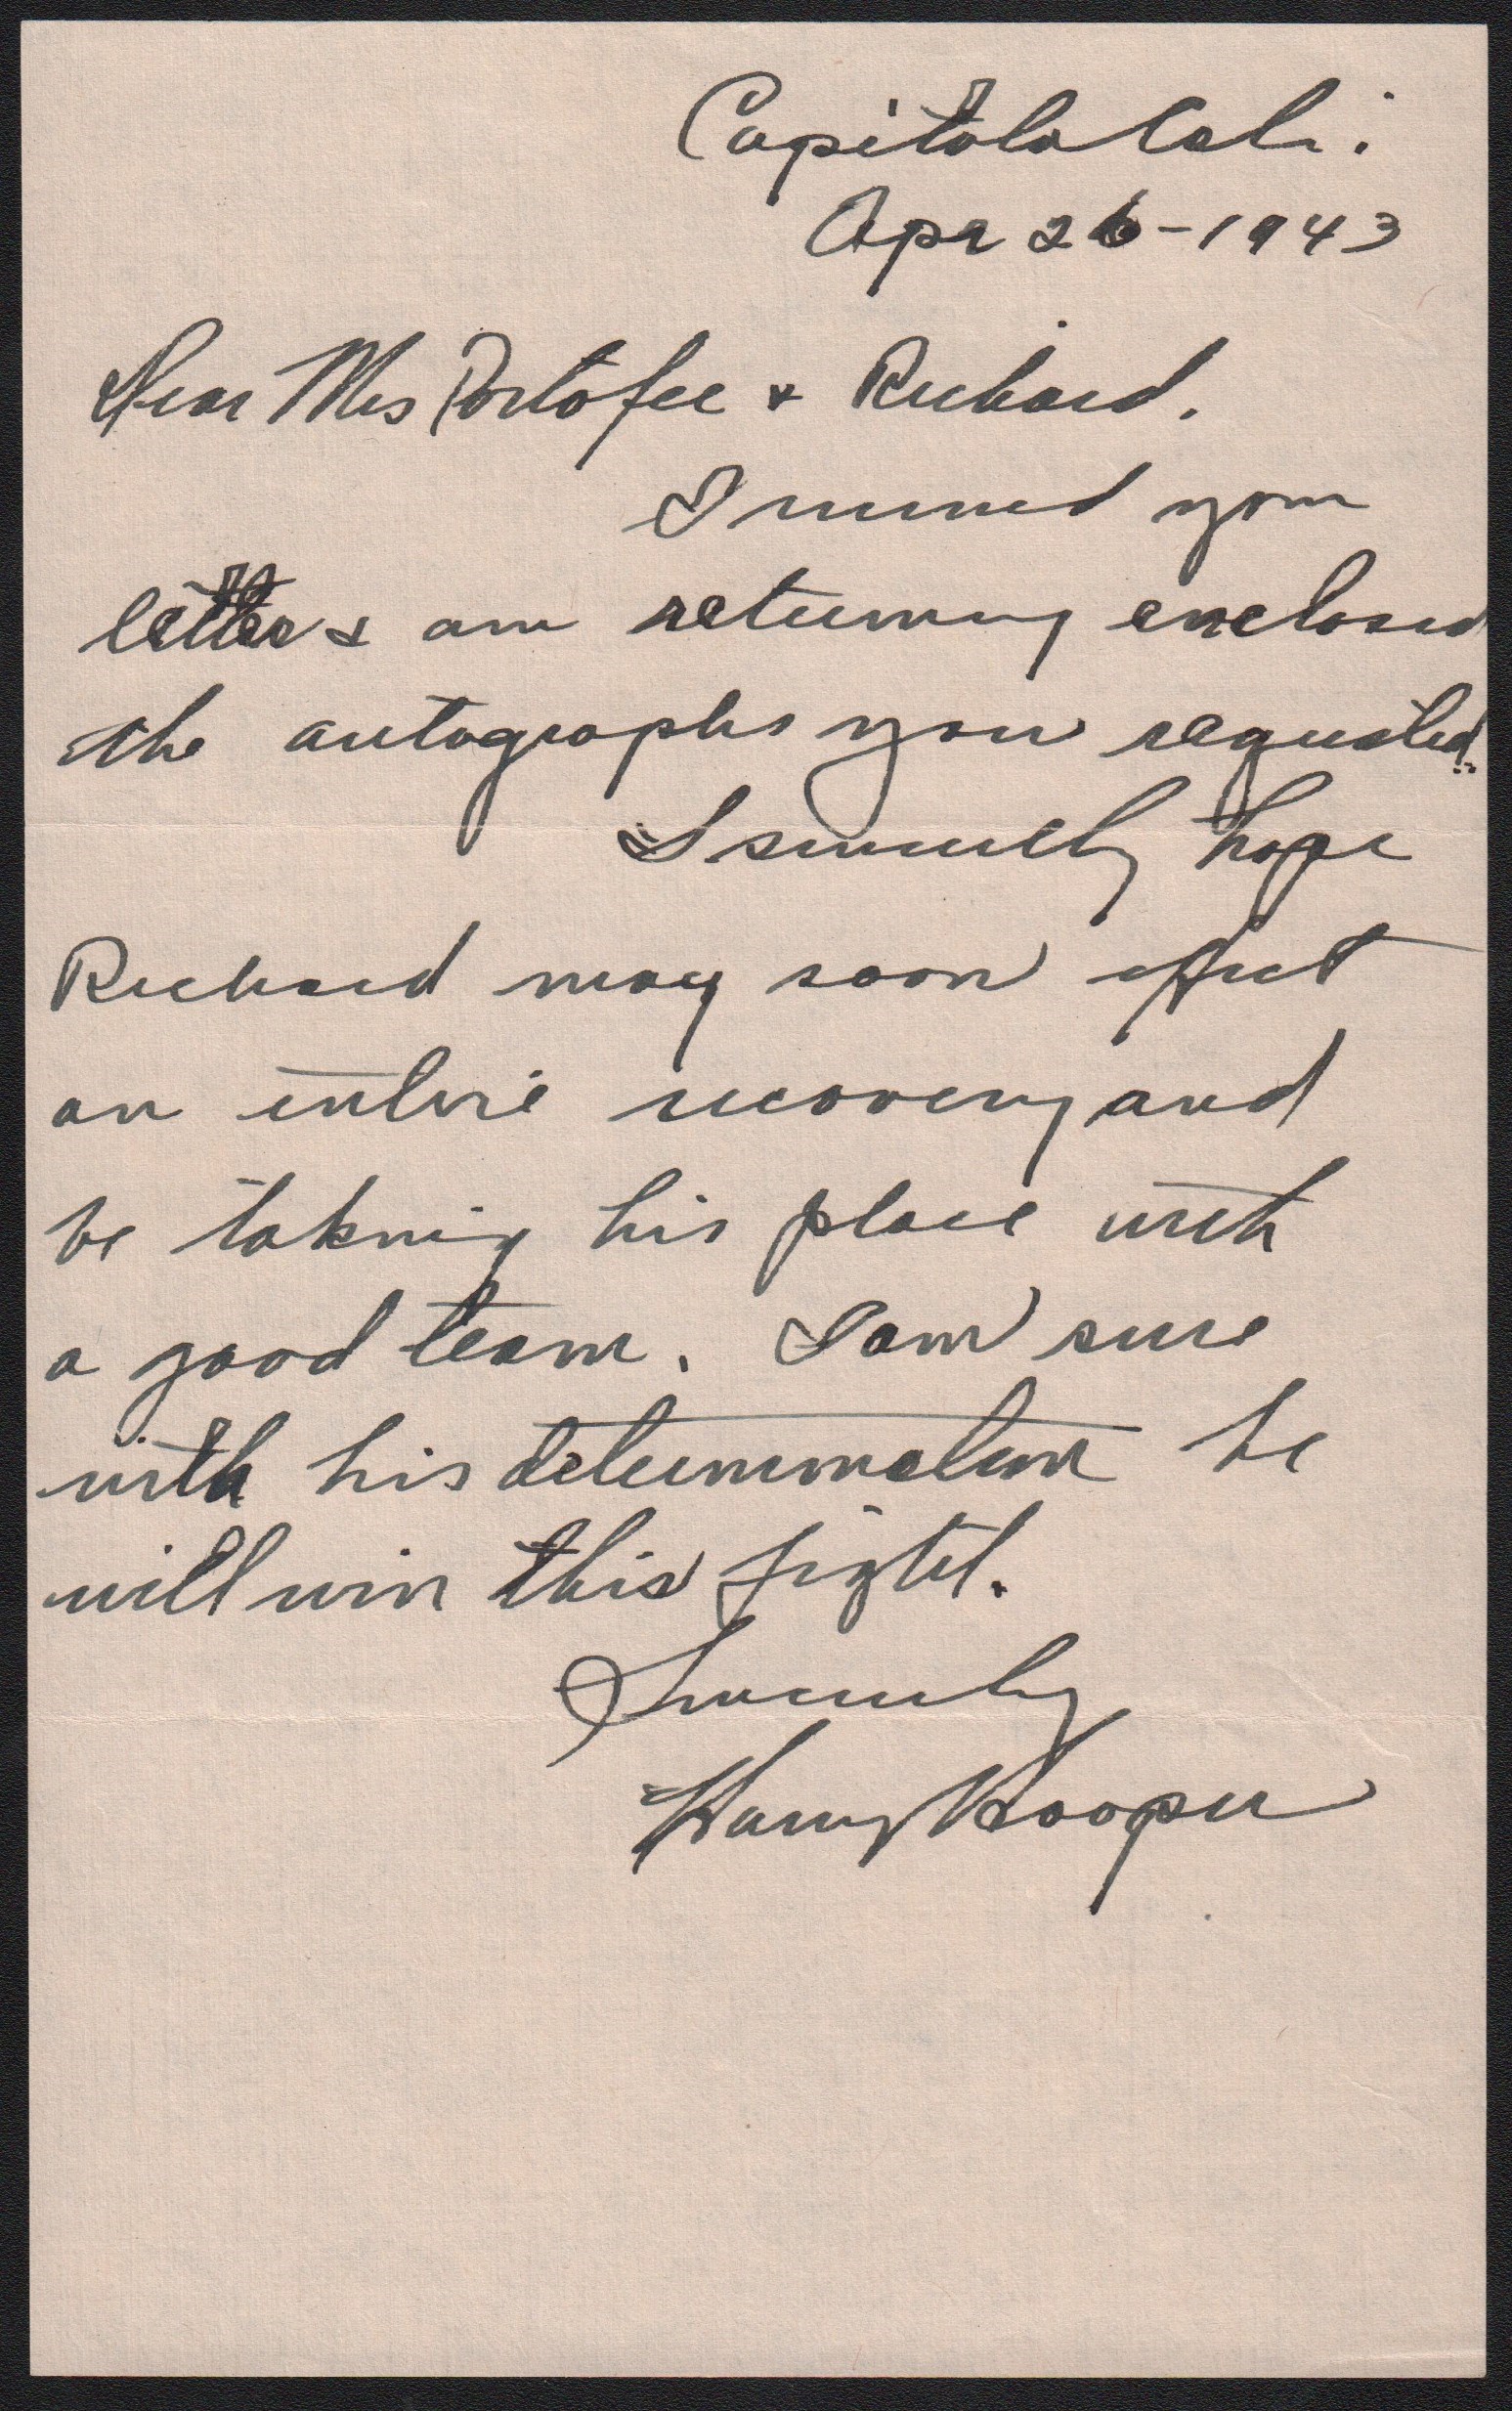 - Harry Hooper Handwritten Letter